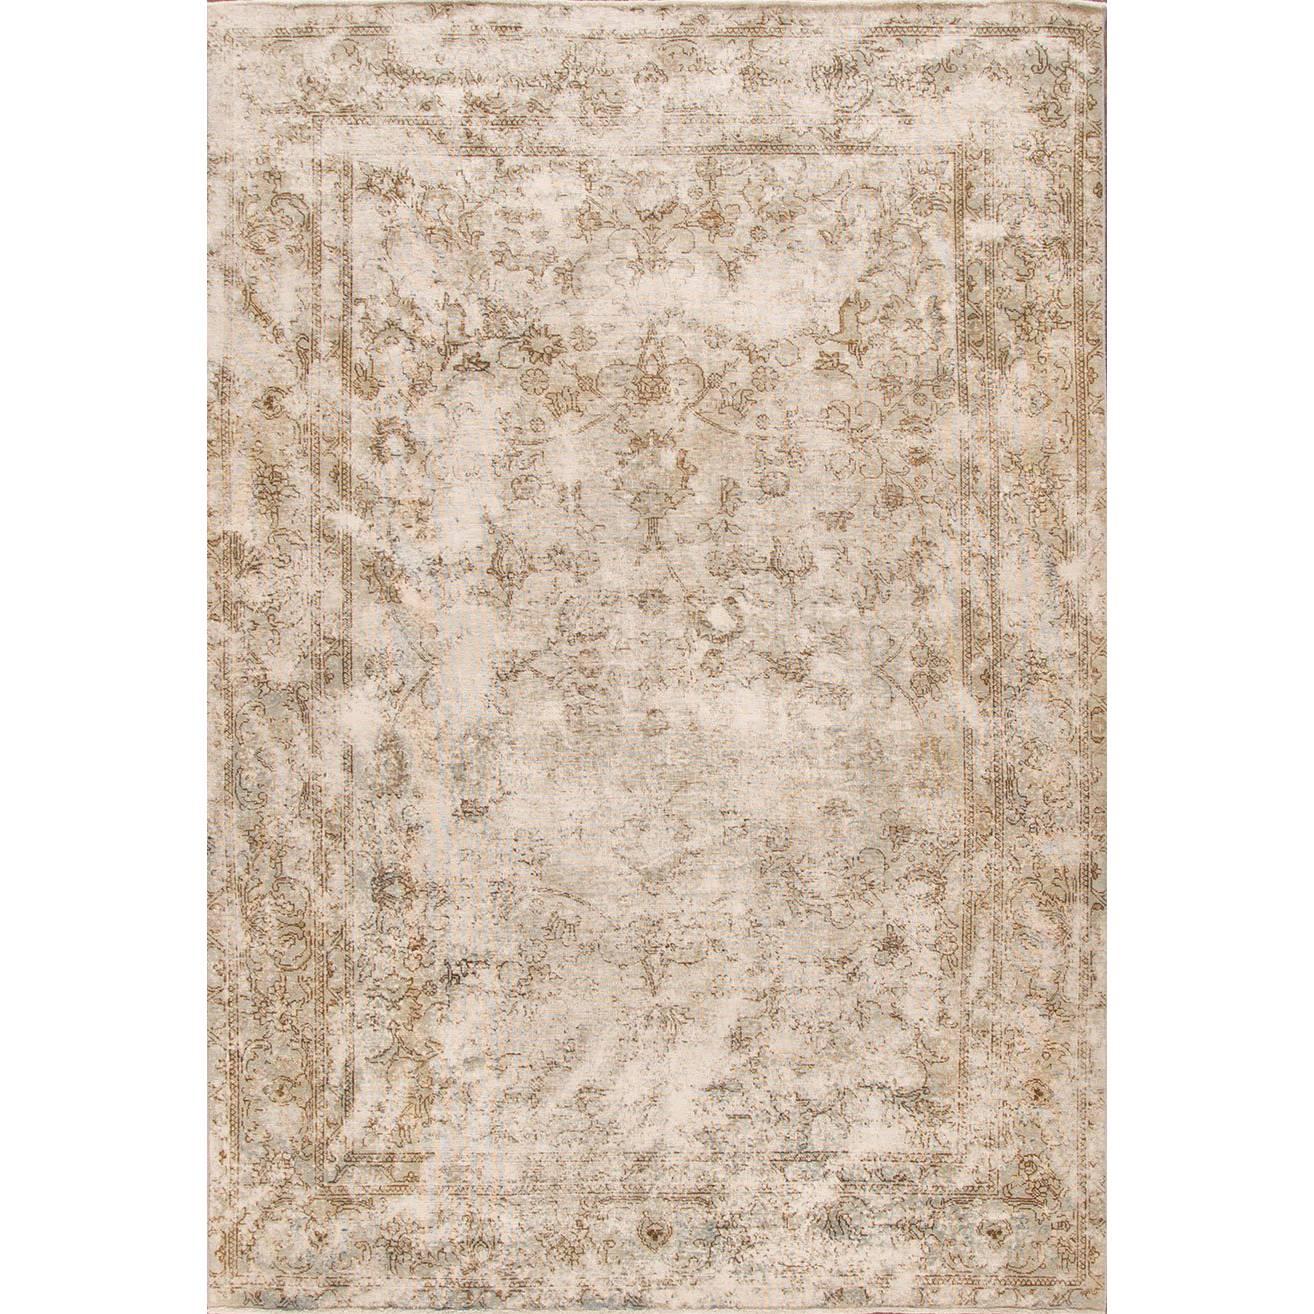 Vintage Distressed Ivory Persian Kerman Carpet